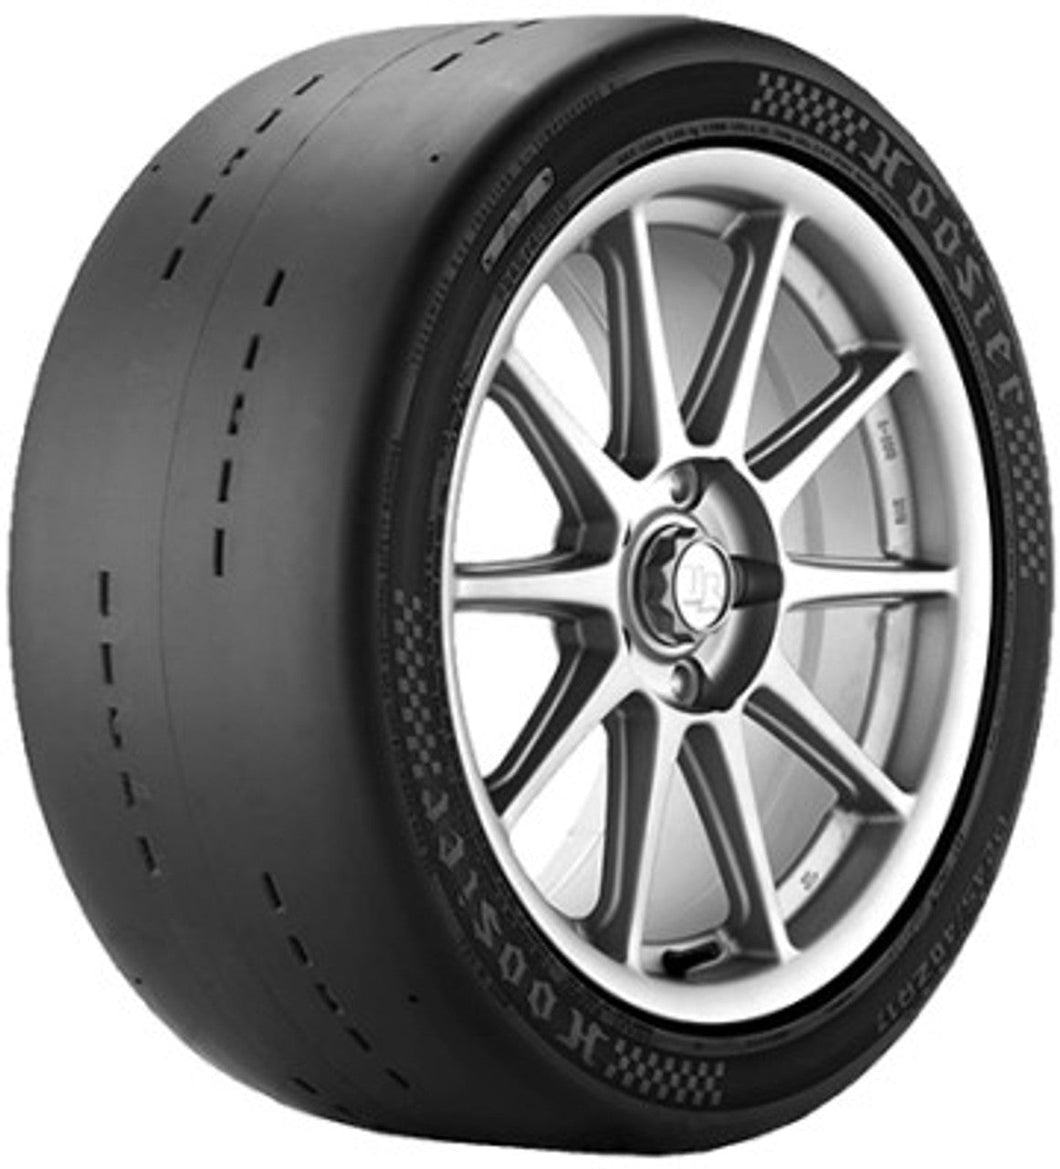 255/40 ZR13 Hoosier Tire Slick D.O.T Neumático